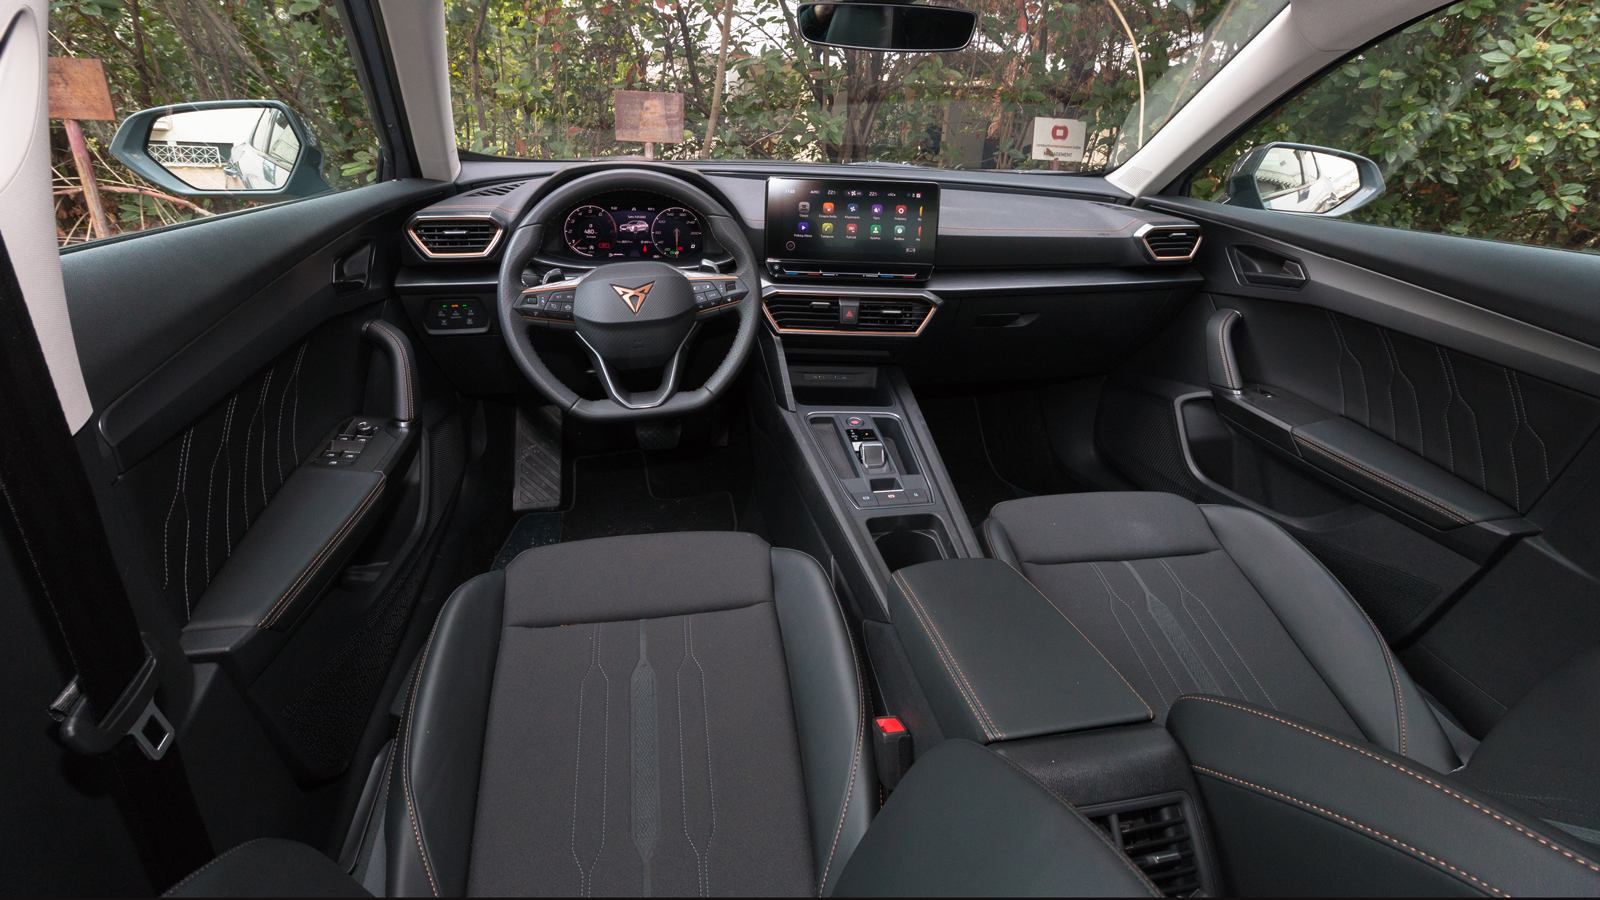 Premium υλικά, στιβαρή συναρμογή, αθλητικά στοιχεία και εντυπωσιακές χάλκινες λεπτομέρειες συγκροτούν τον εσωτερικό διάκοσμο του SUV